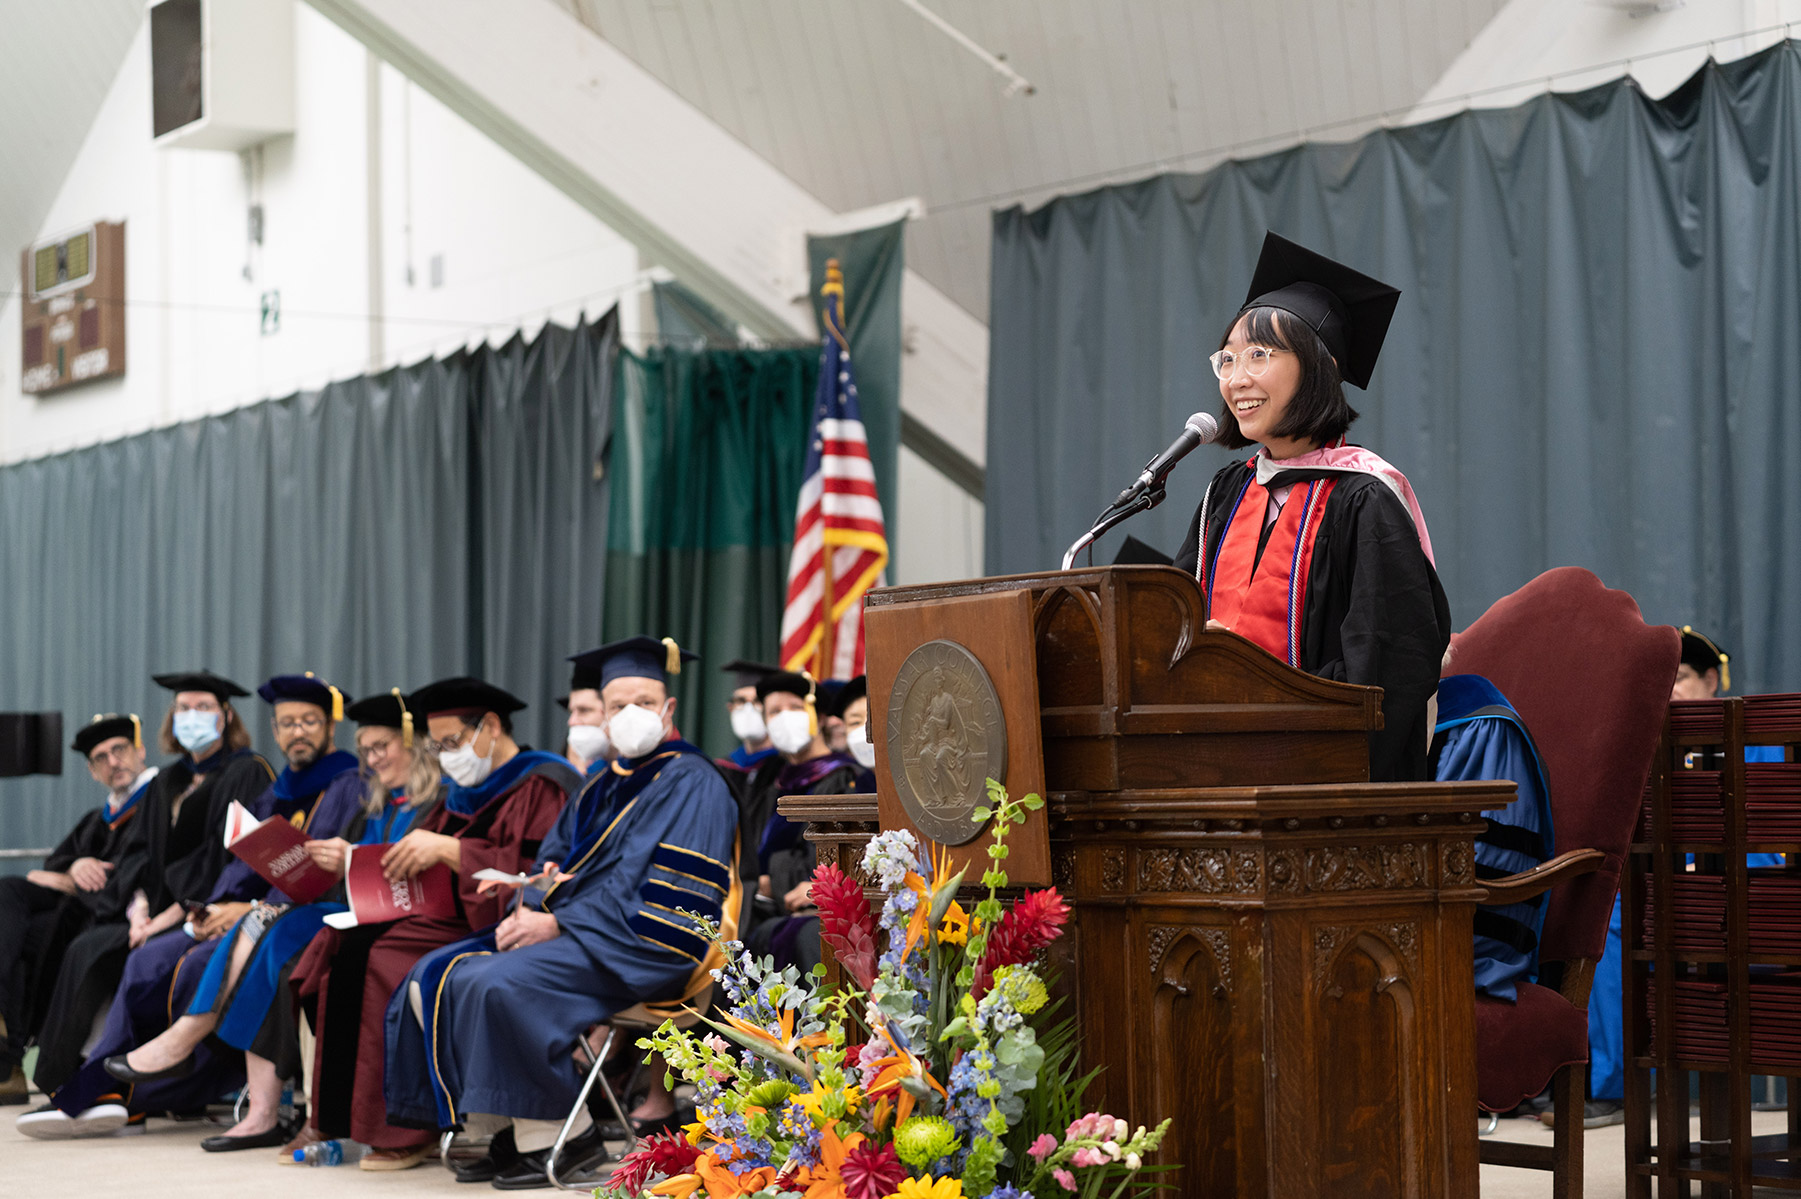 2020 Senior Class President Heather Phan Nguyen ’20 reflected on her classmates’ journey through the COVID era.